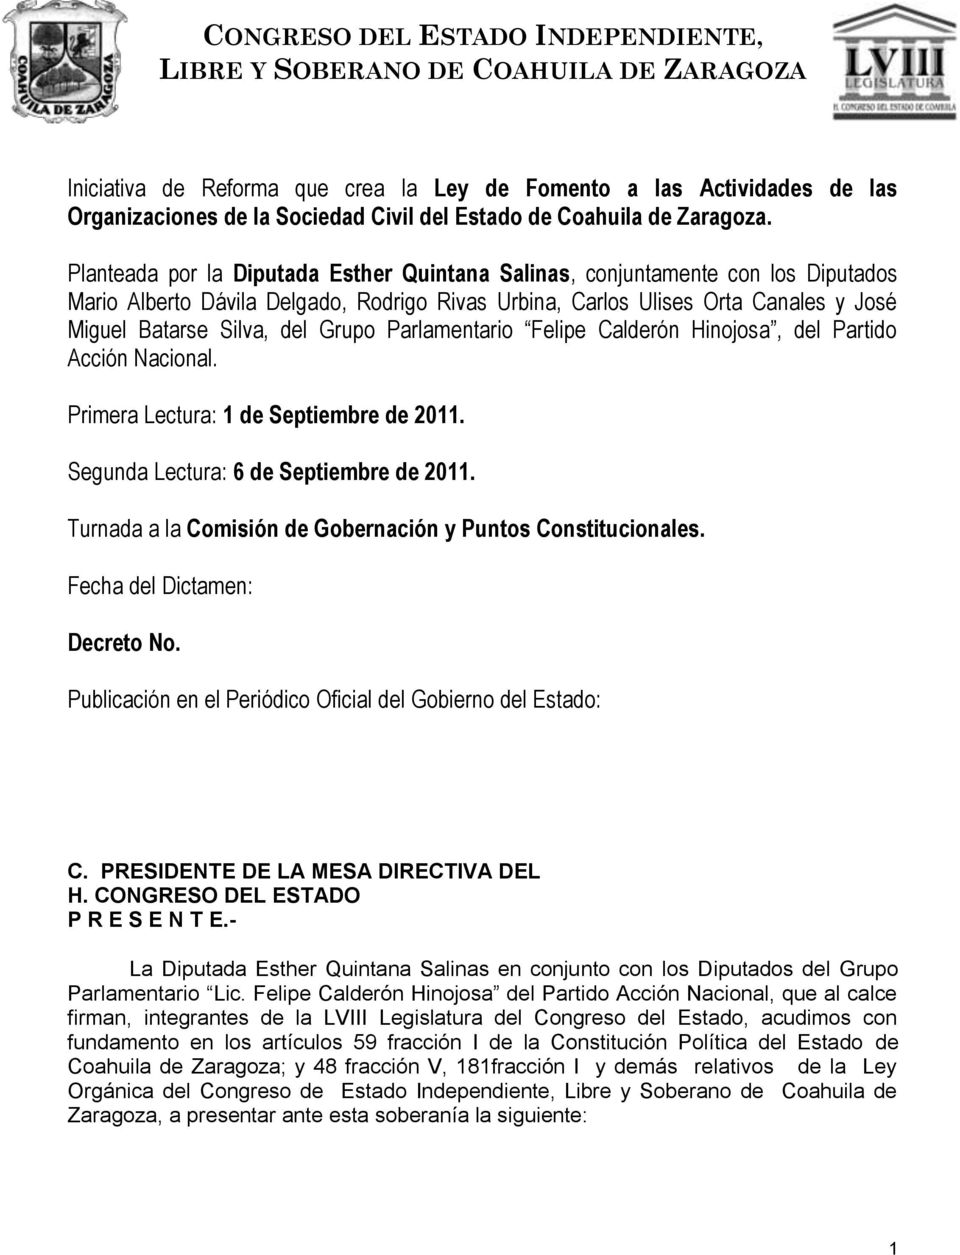 Grupo Parlamentario Felipe Calderón Hinojosa, del Partido Acción Nacional. Primera Lectura: 1 de Septiembre de 2011. Segunda Lectura: 6 de Septiembre de 2011.